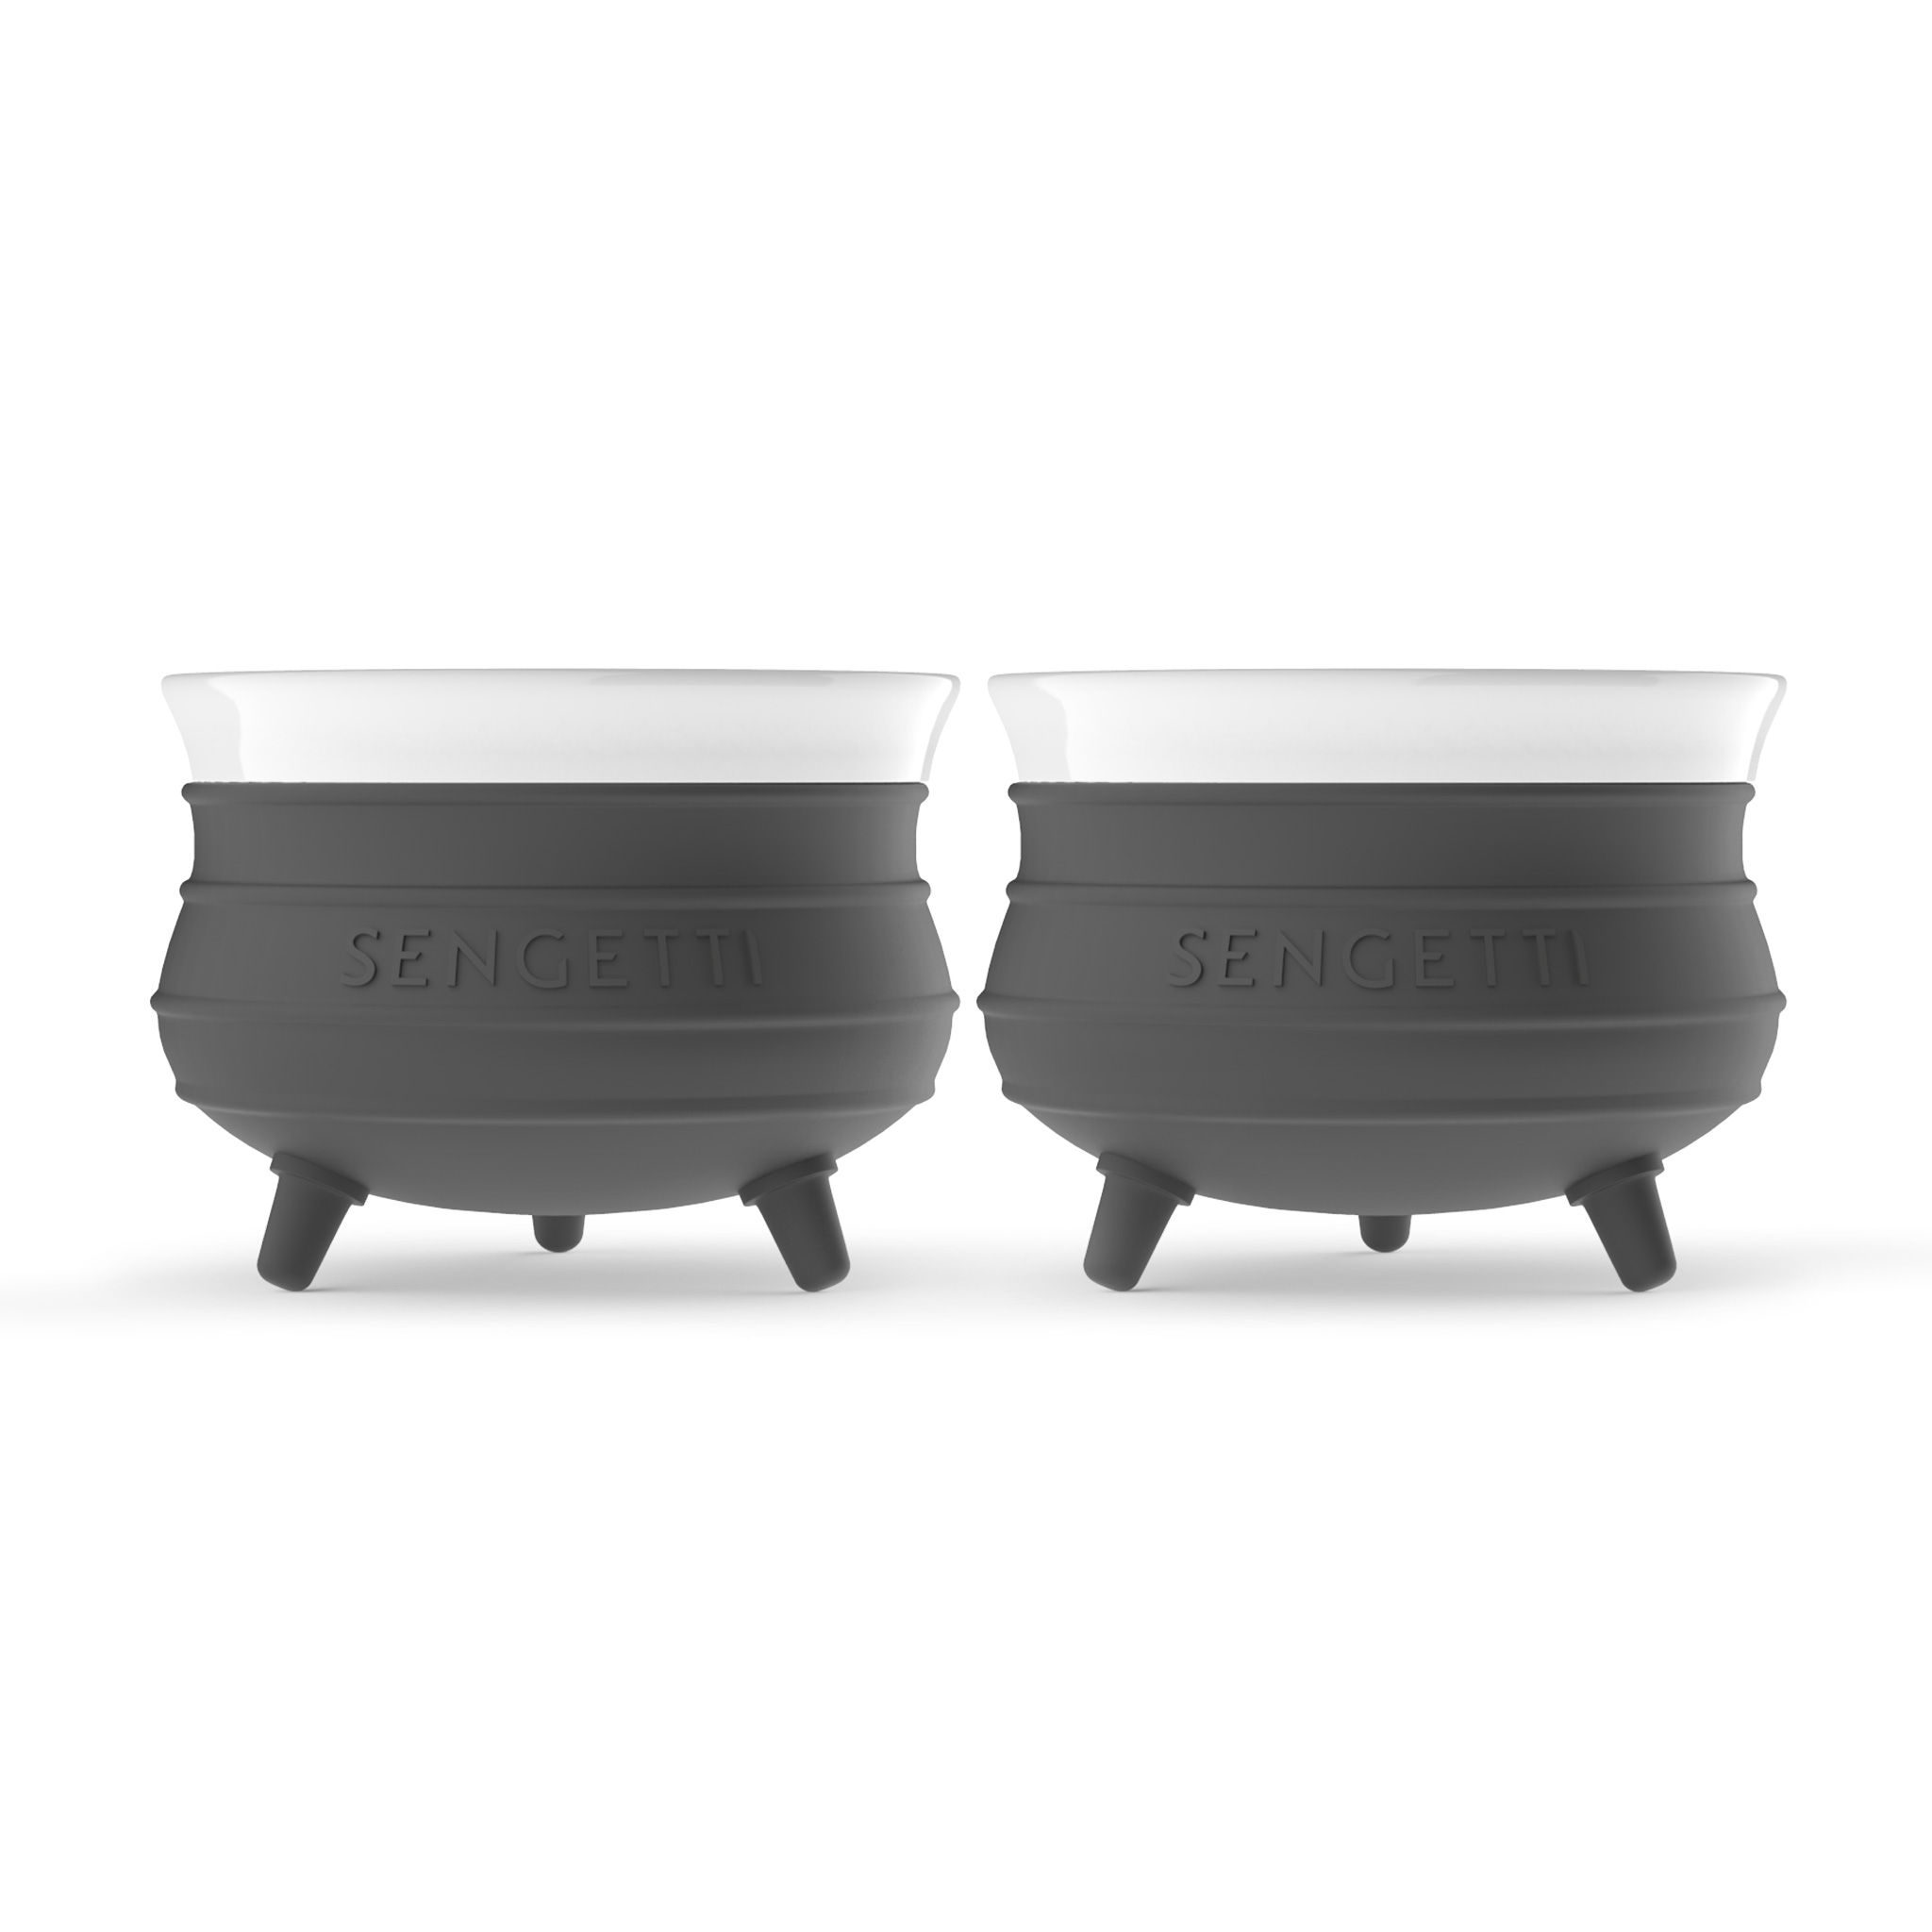 Sengetti Potjie Pot Mini Set of 2 Charcoal